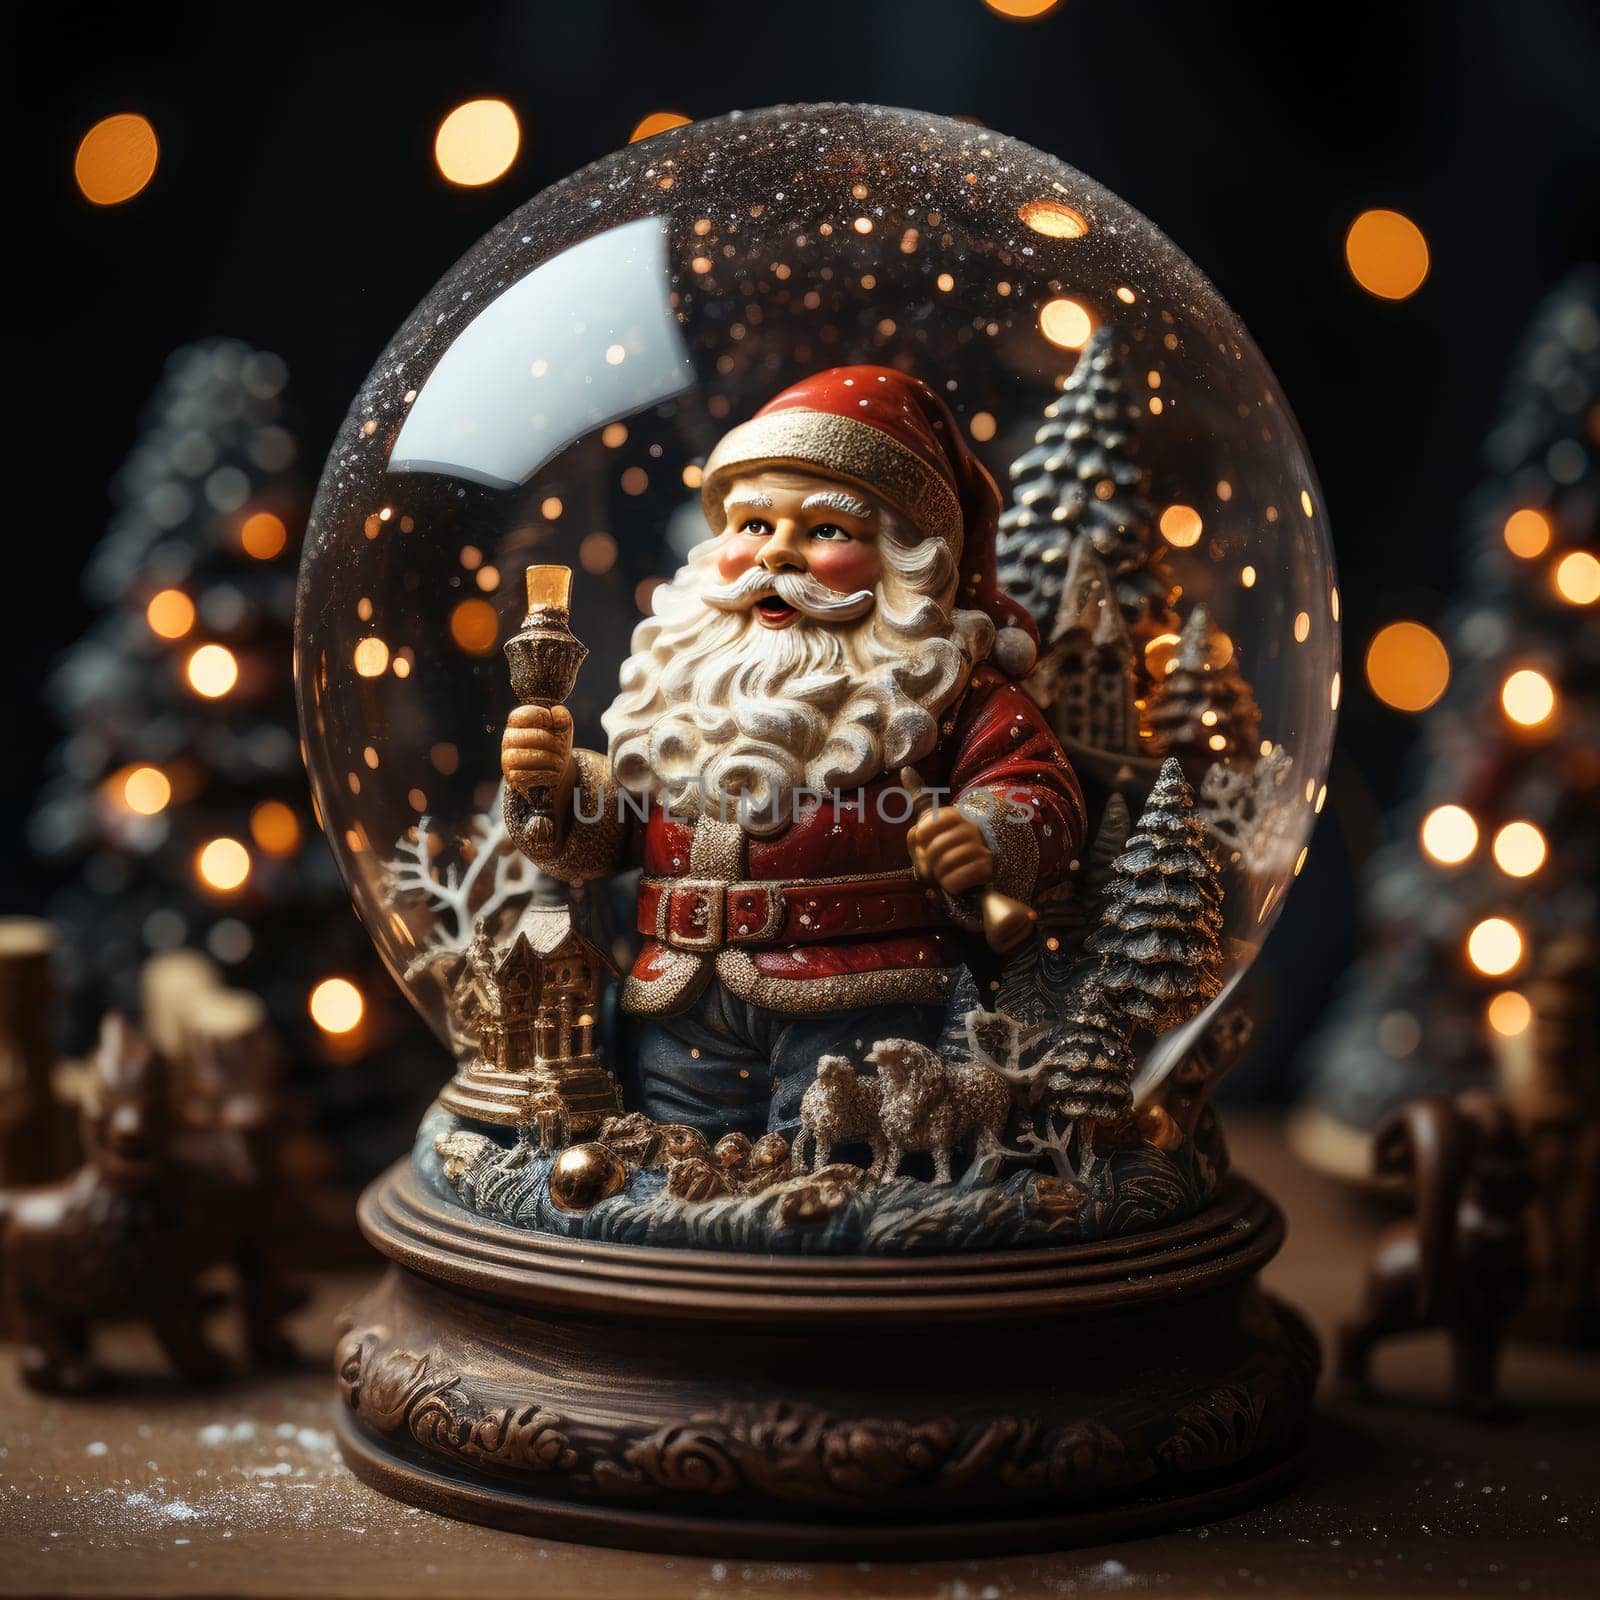 Santa Claus Snow Globe in Glass Ball, Festive Christmas Decor by Yurich32